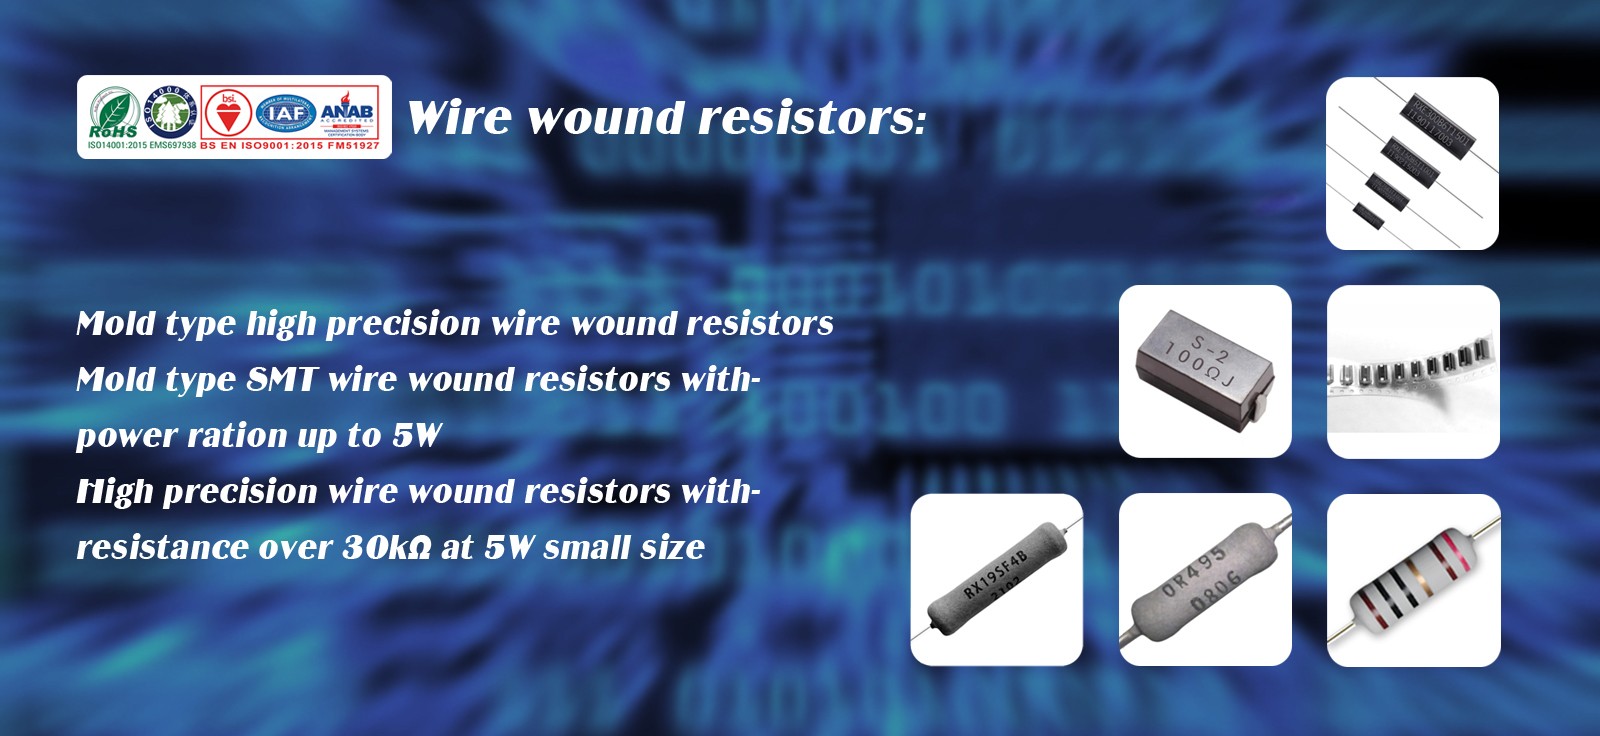 High precision wire wound resistors